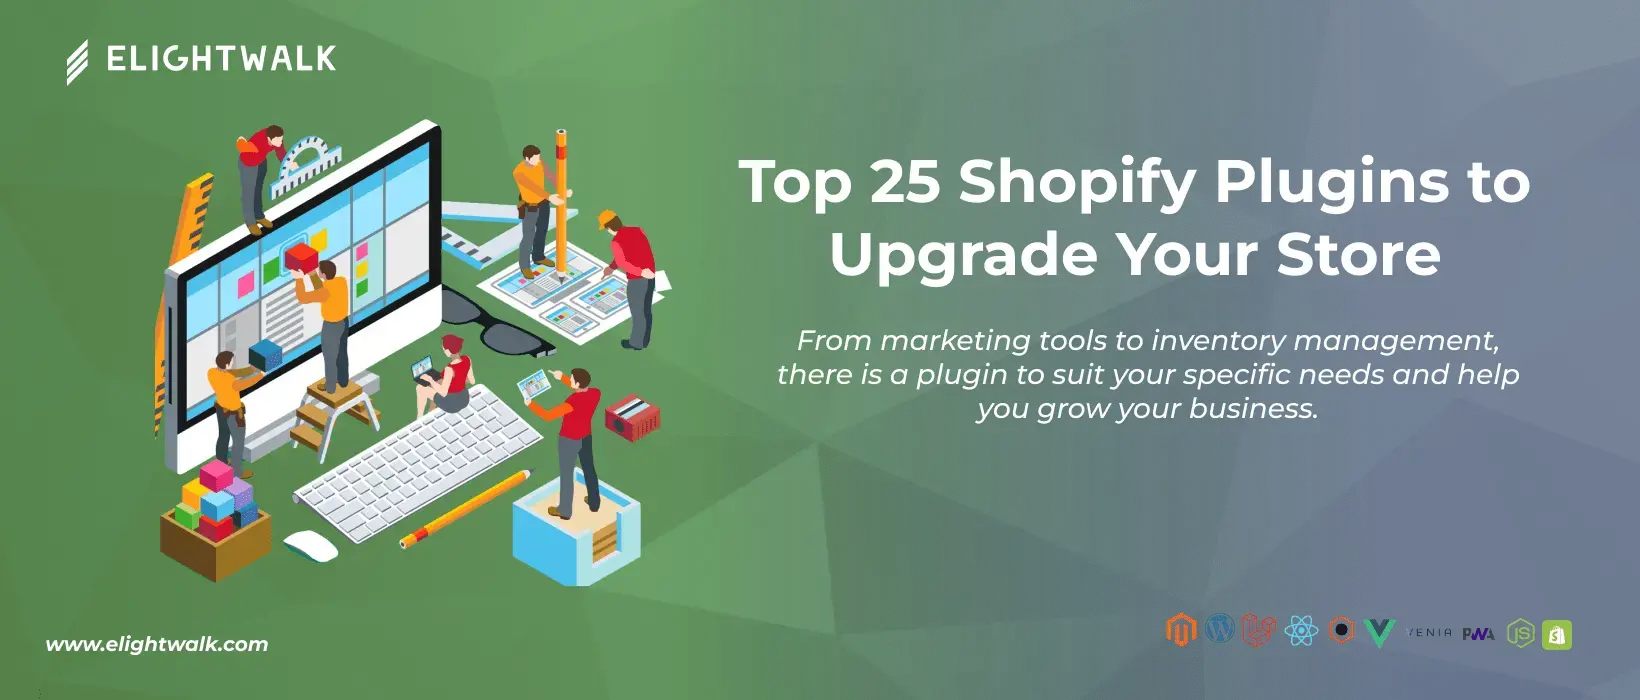 Top 25 Shopify Plugins